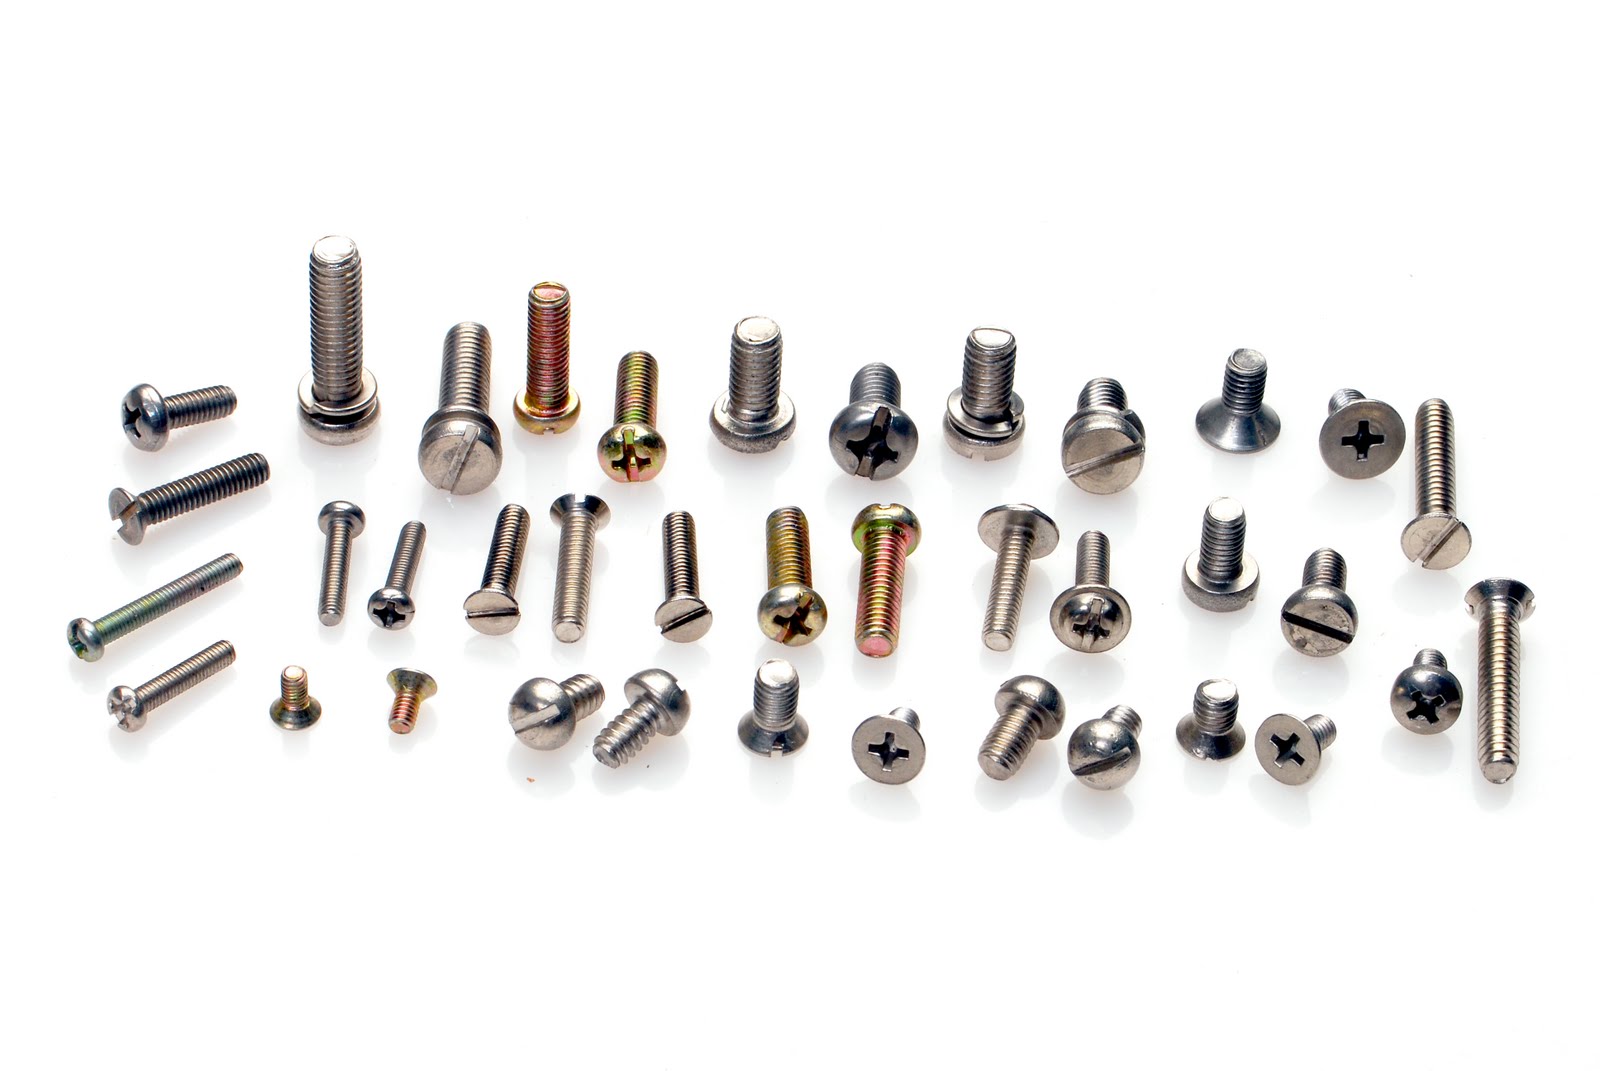 all types of screws